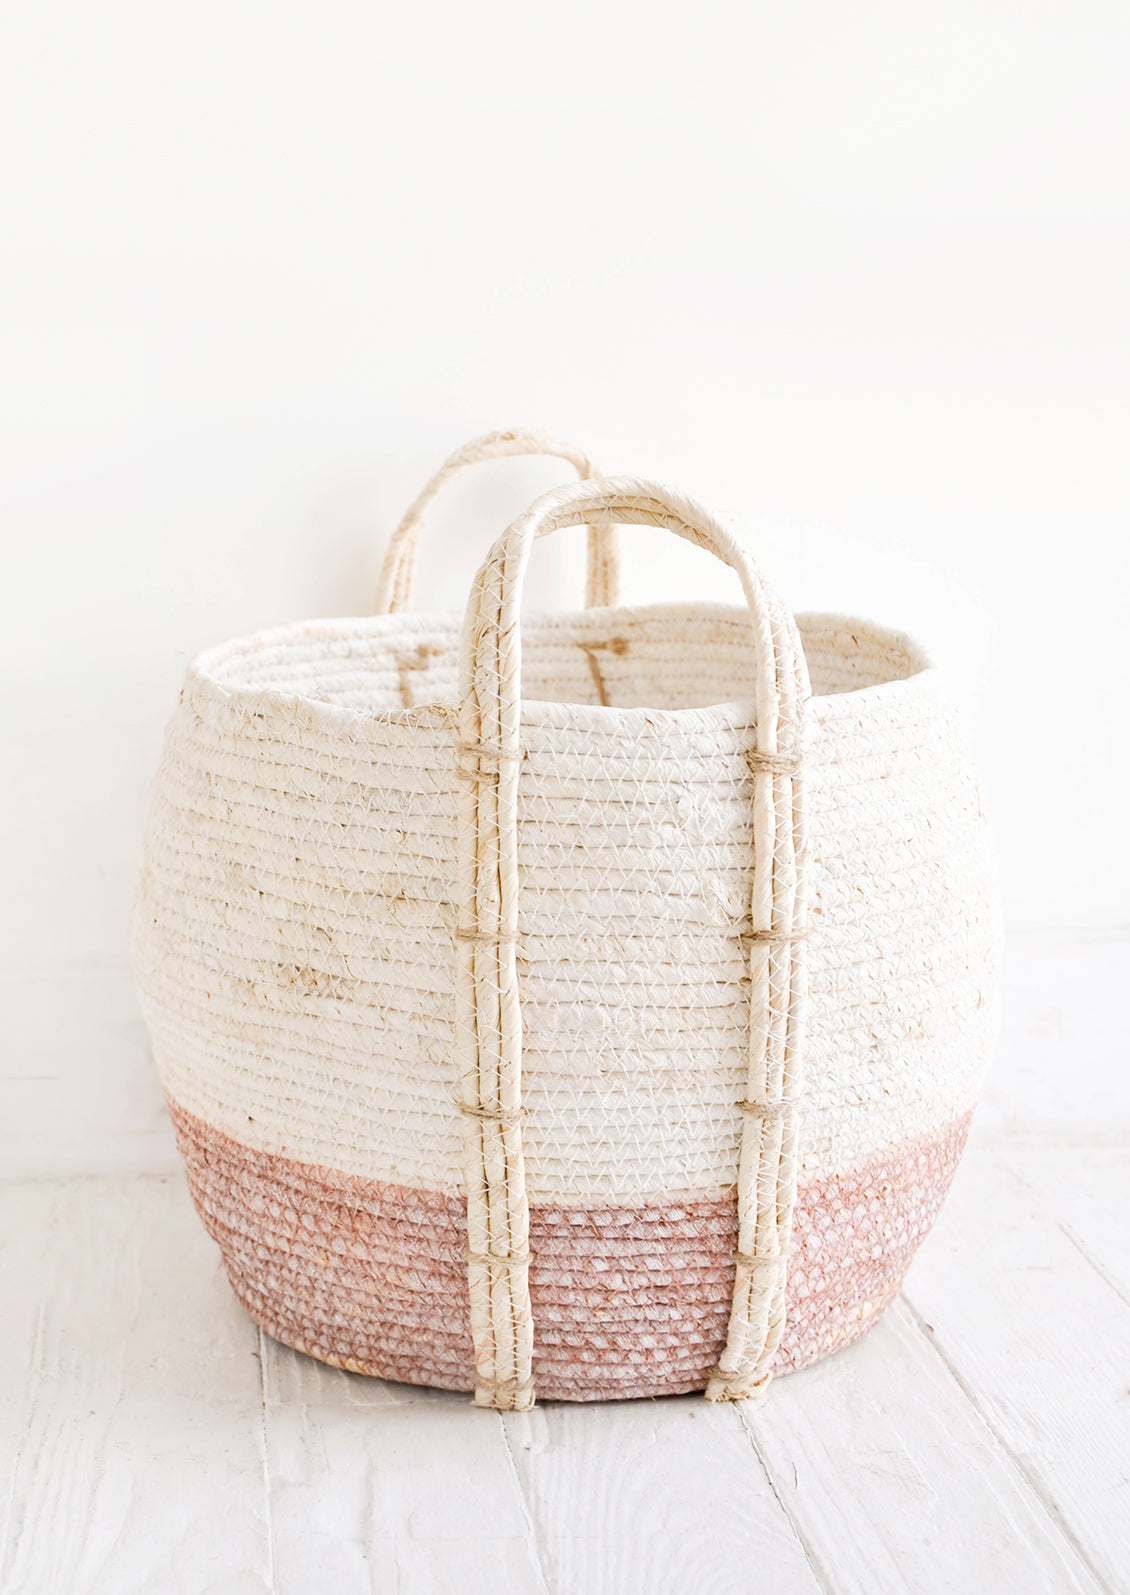 Round storage basket made from natural maize fiber, fiber handles attached at sides, band of contrasting pink color along bottom.